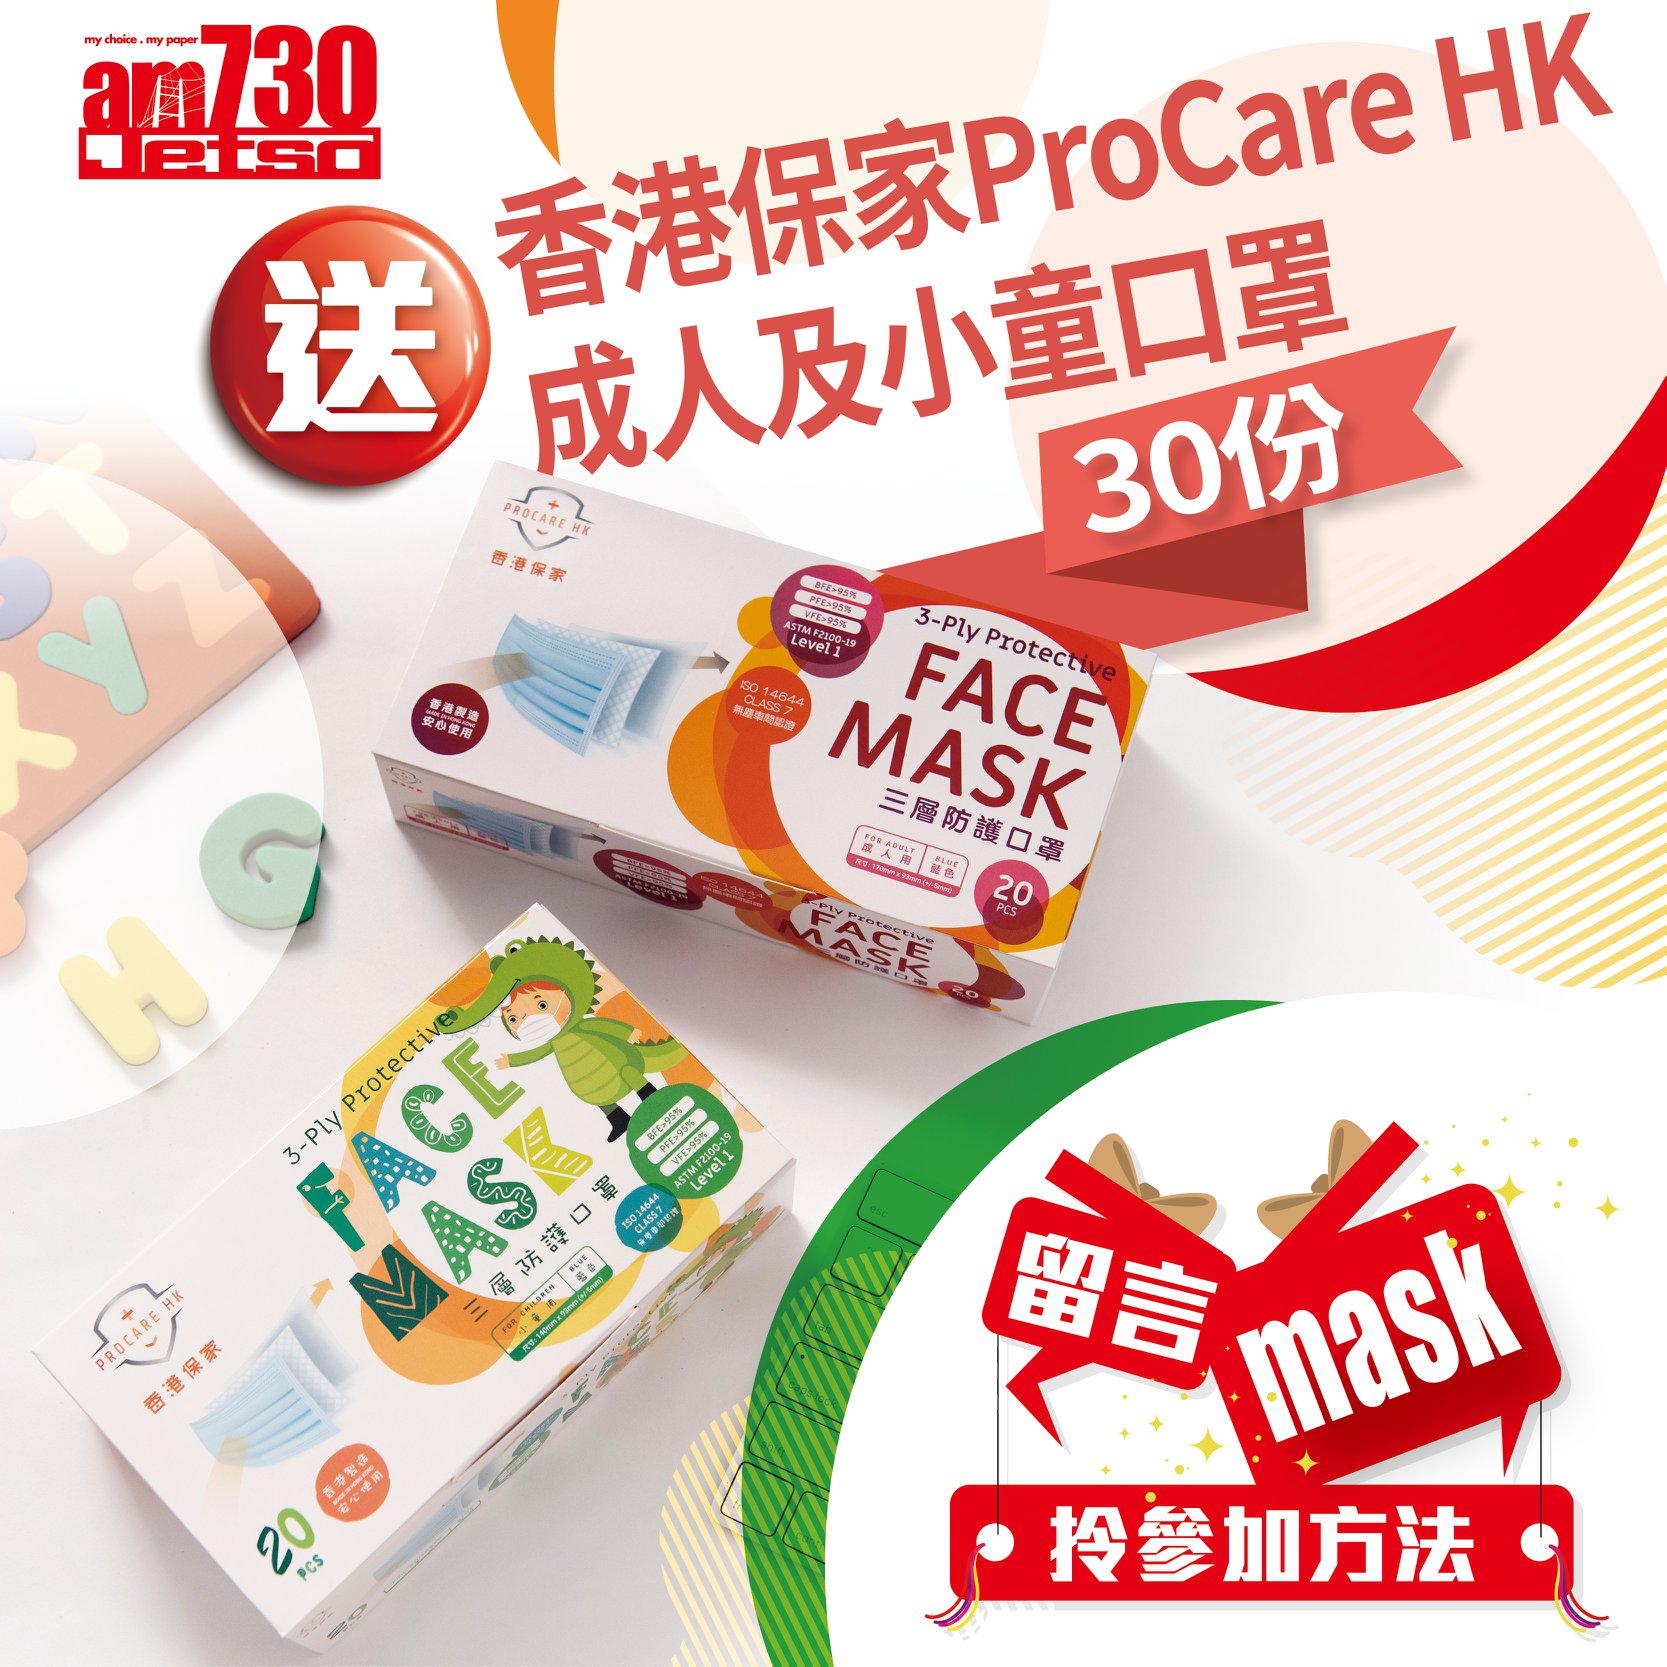 AM健康 有獎遊戲送 香港保家ProCare HK成人及小童口罩